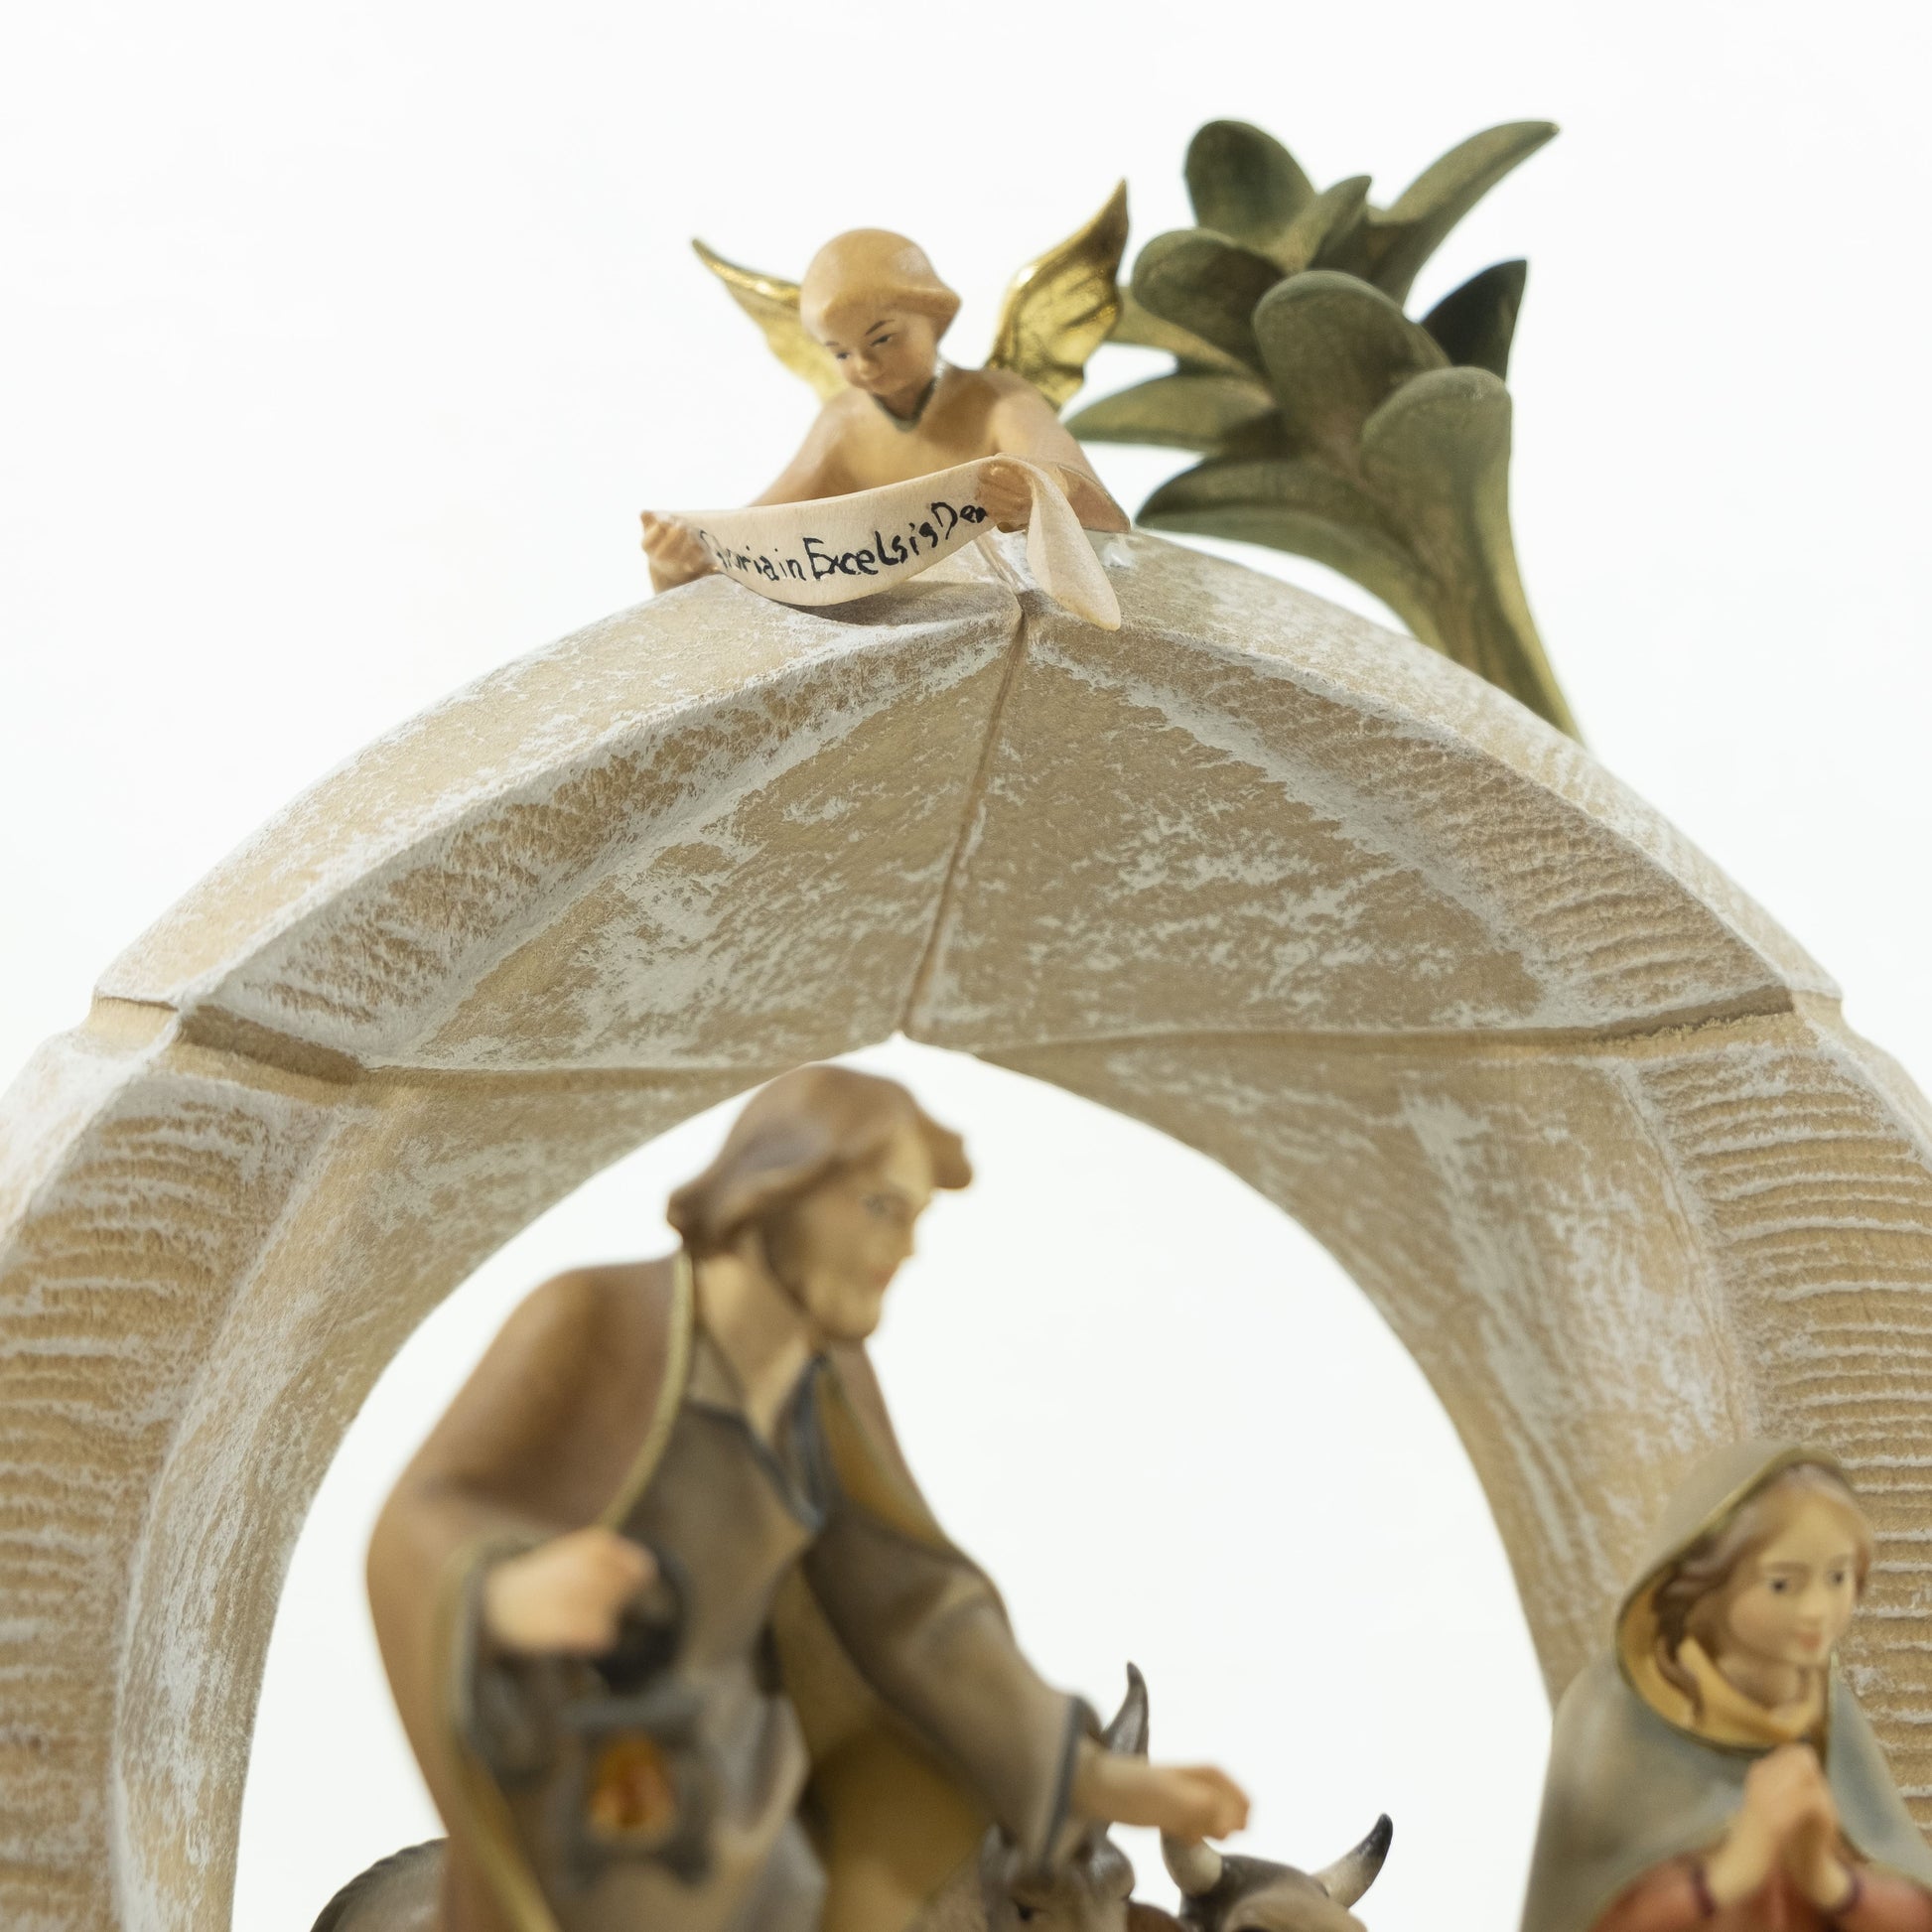 MONDO CATTOLICO Wooden Nativity Set 9pz